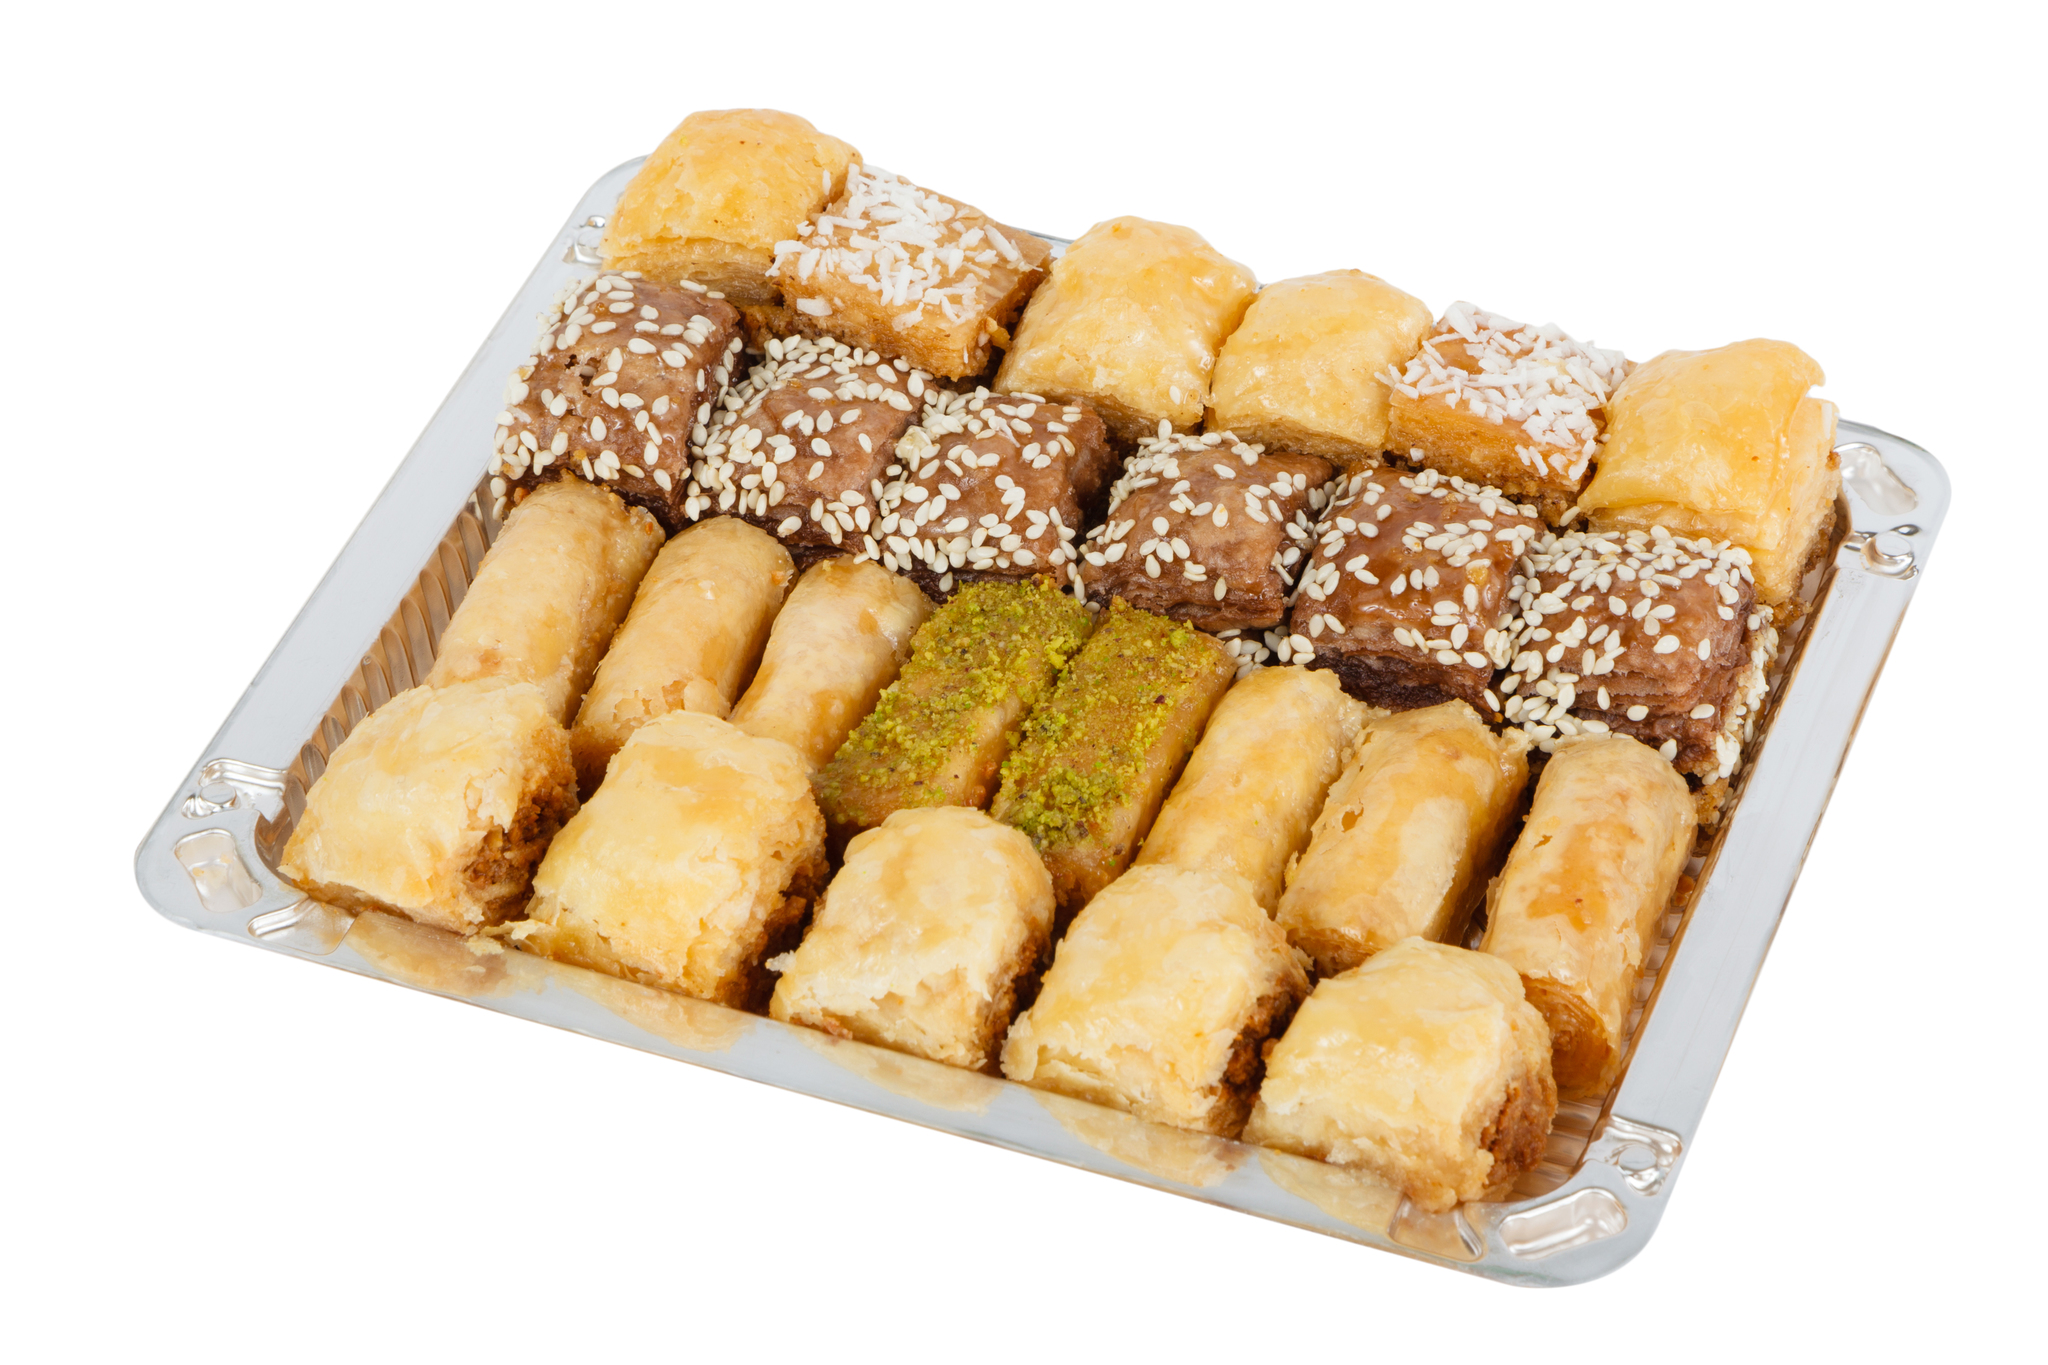 Pate D'or Пахлава - ассорти ливанских сладостей "Финикия", 350 г import_files_84_84b20a3c787e11e799f3606c664b1de1_eb067e2cae8911e7b011fcaa1488e48f.jpg